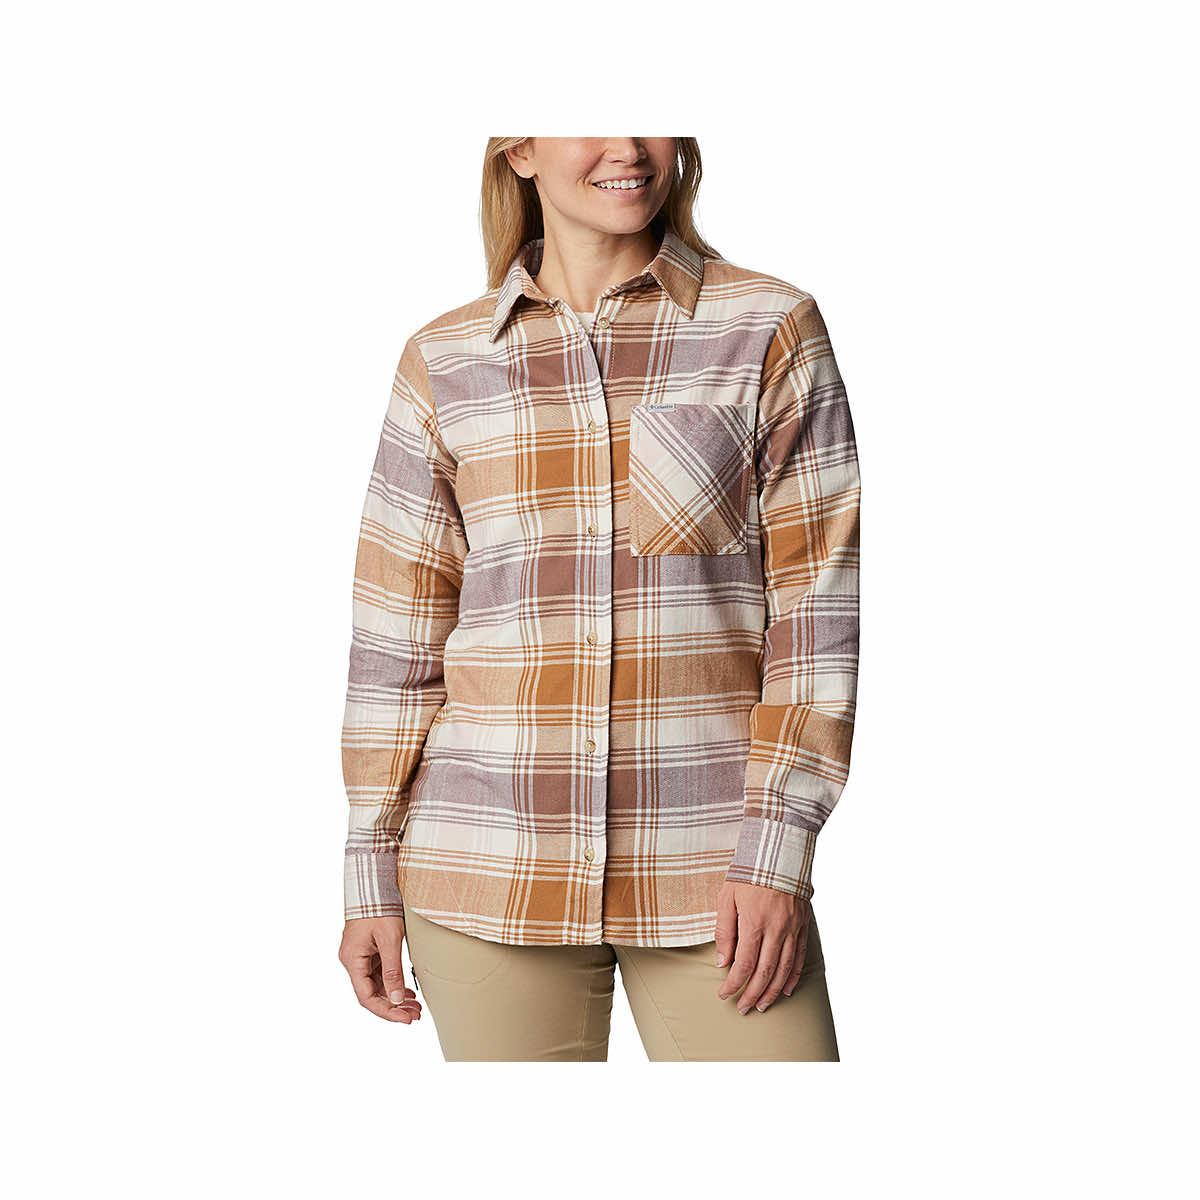  Women's Calico Basin Flannel Long Sleeve Shirt